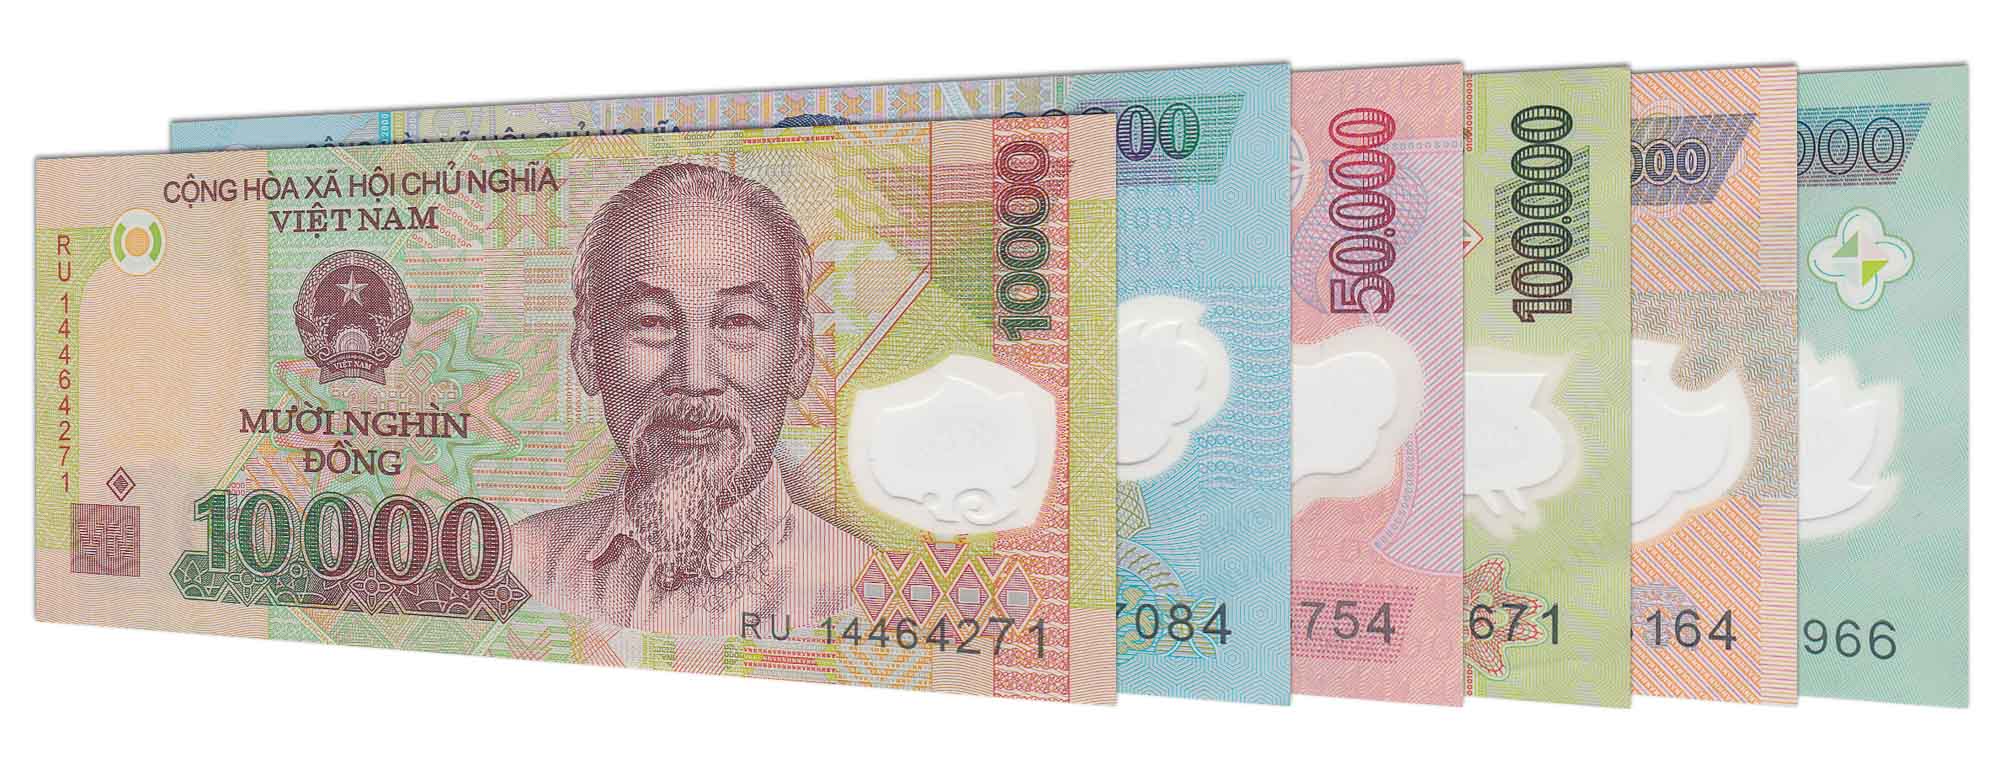 vietnamese exchange rates